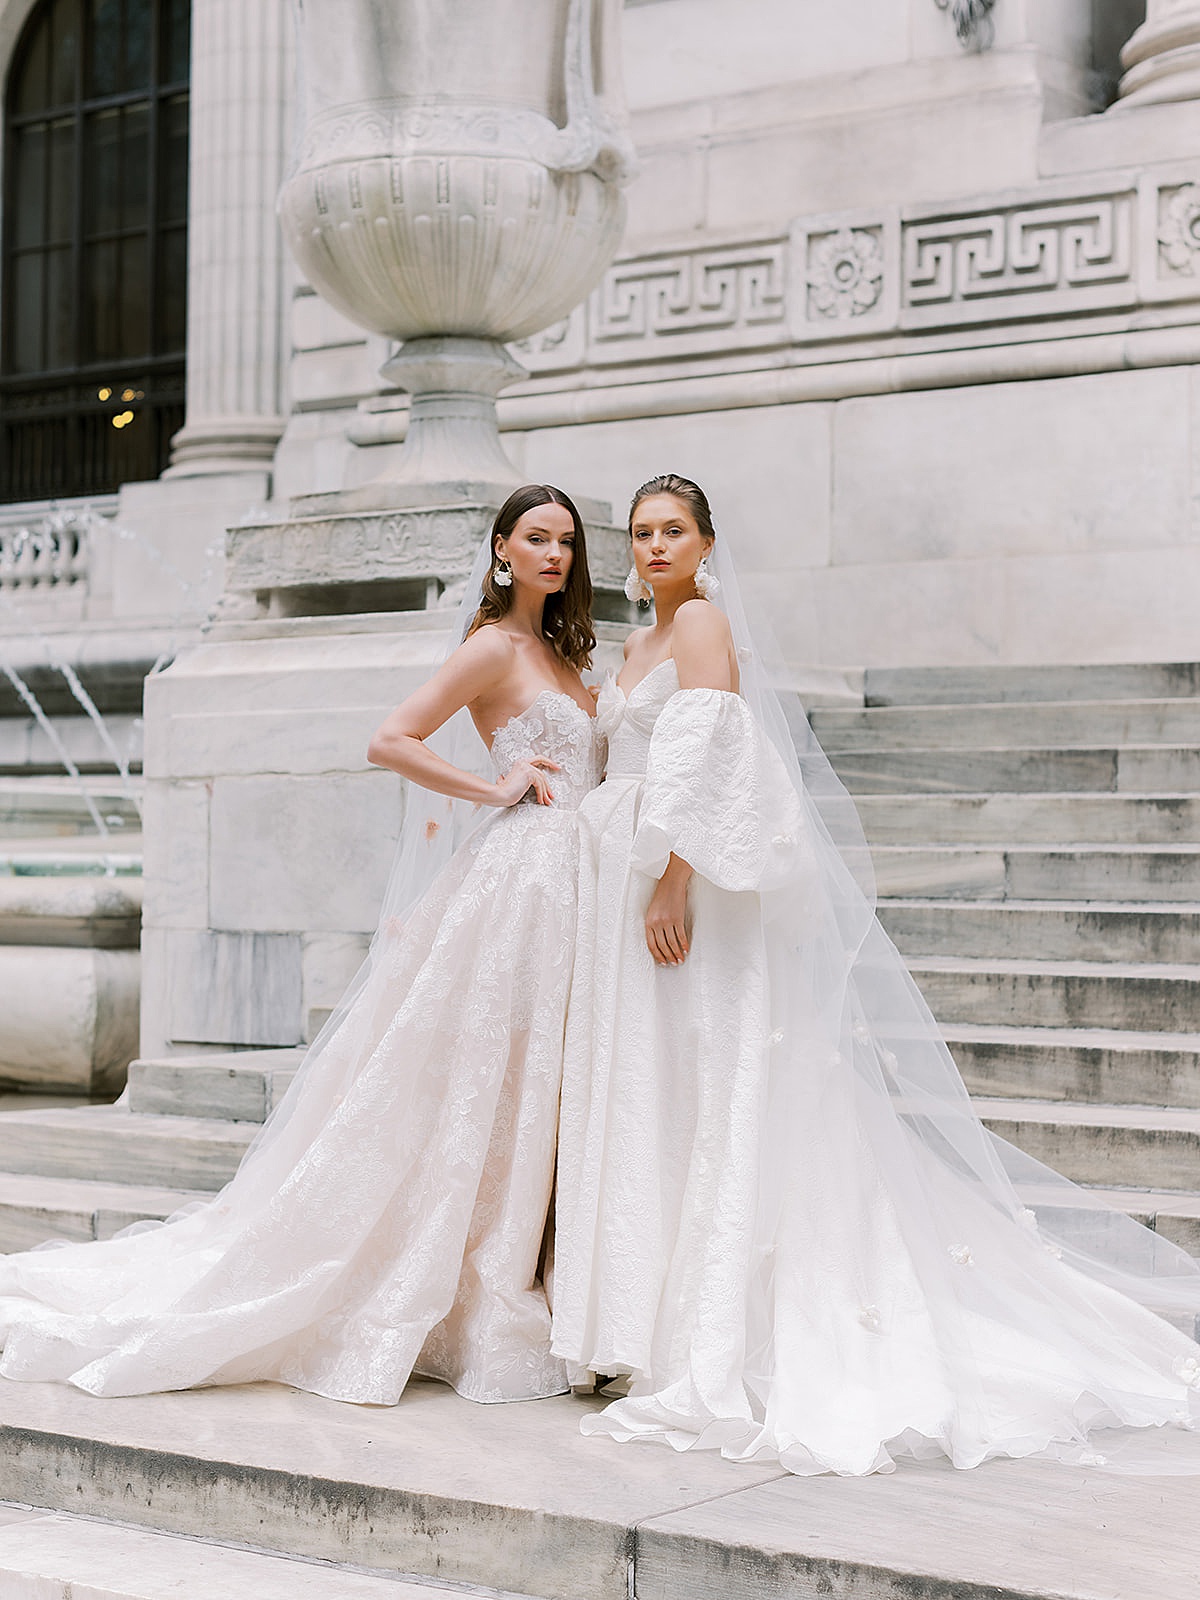 Women pose in elegant ballgown wedding dresses during Beccar couture lookbook fashion shoot